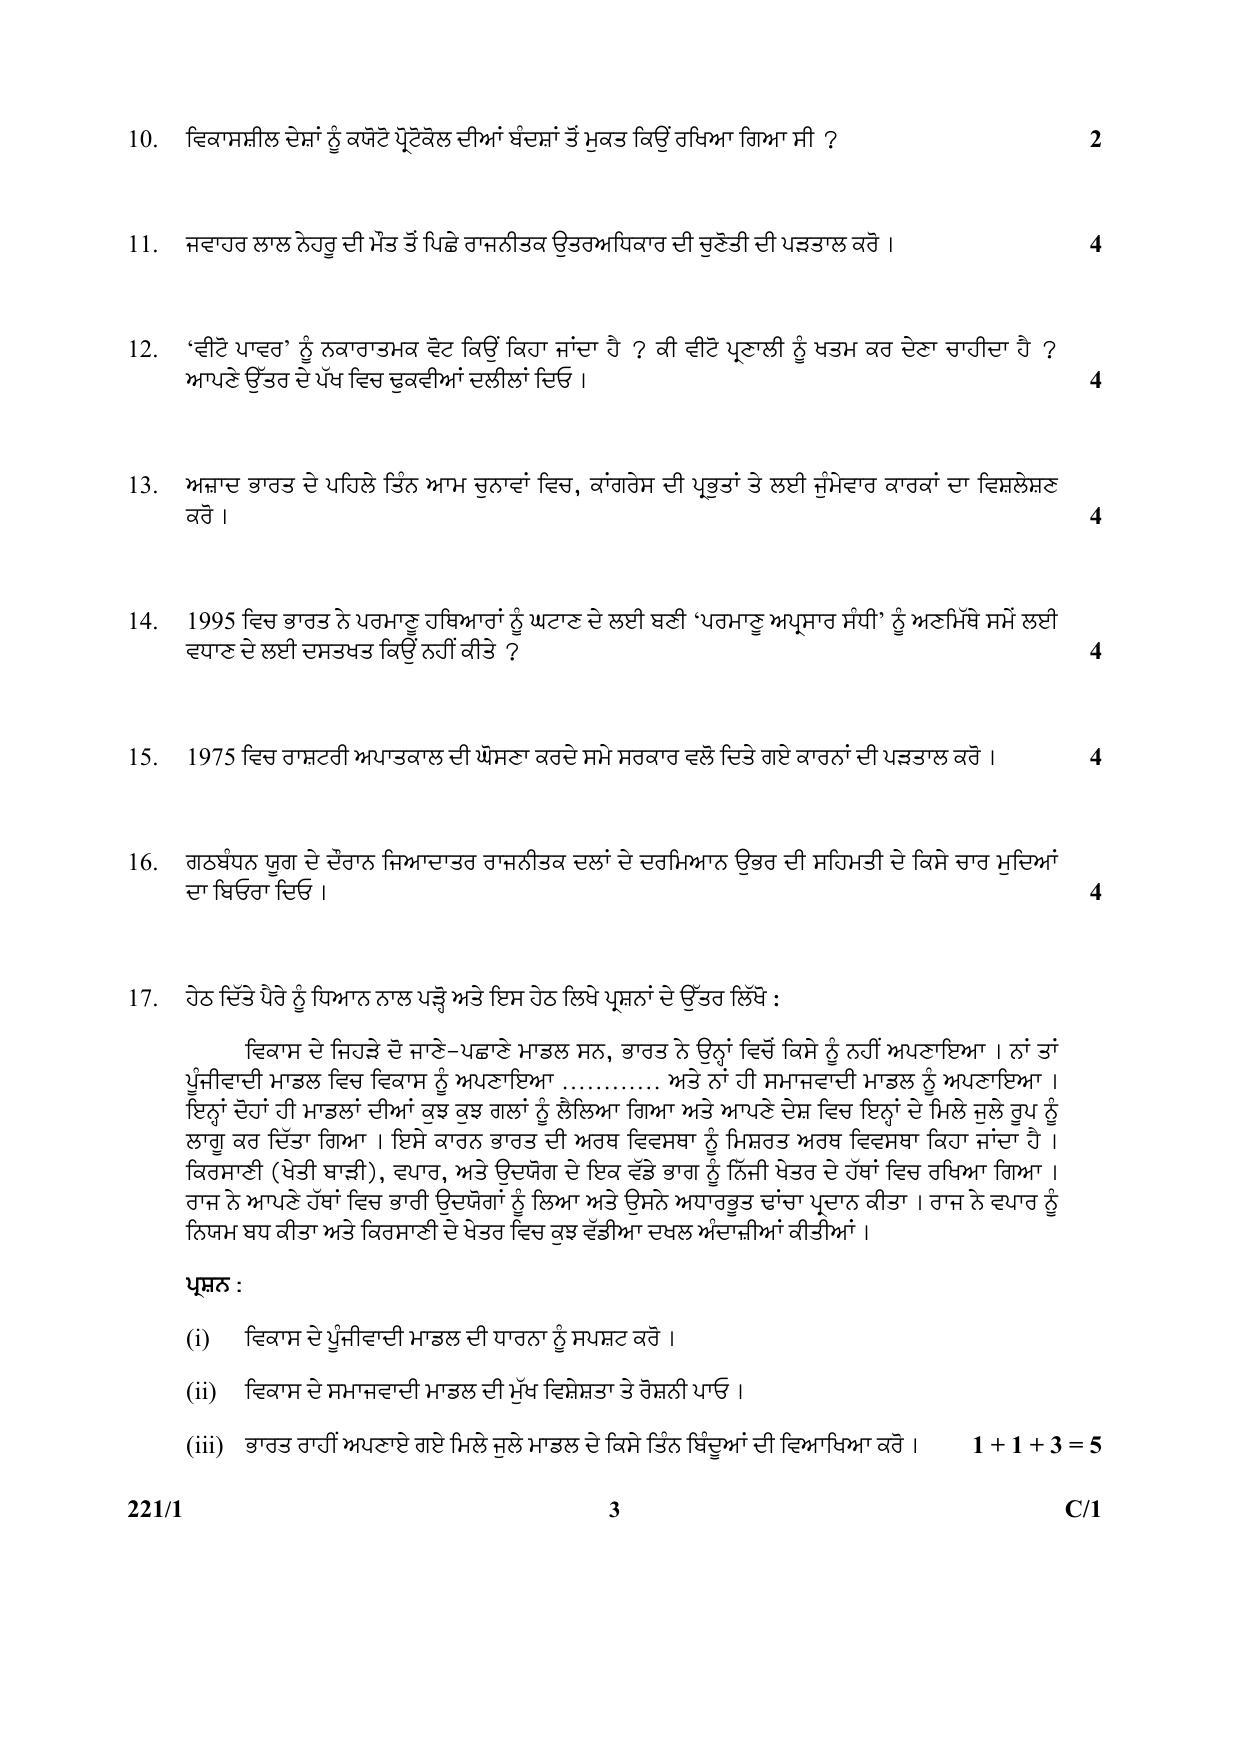 CBSE Class 12 221-1 Political Science_Punjabi 2018 Compartment Question Paper - Page 3